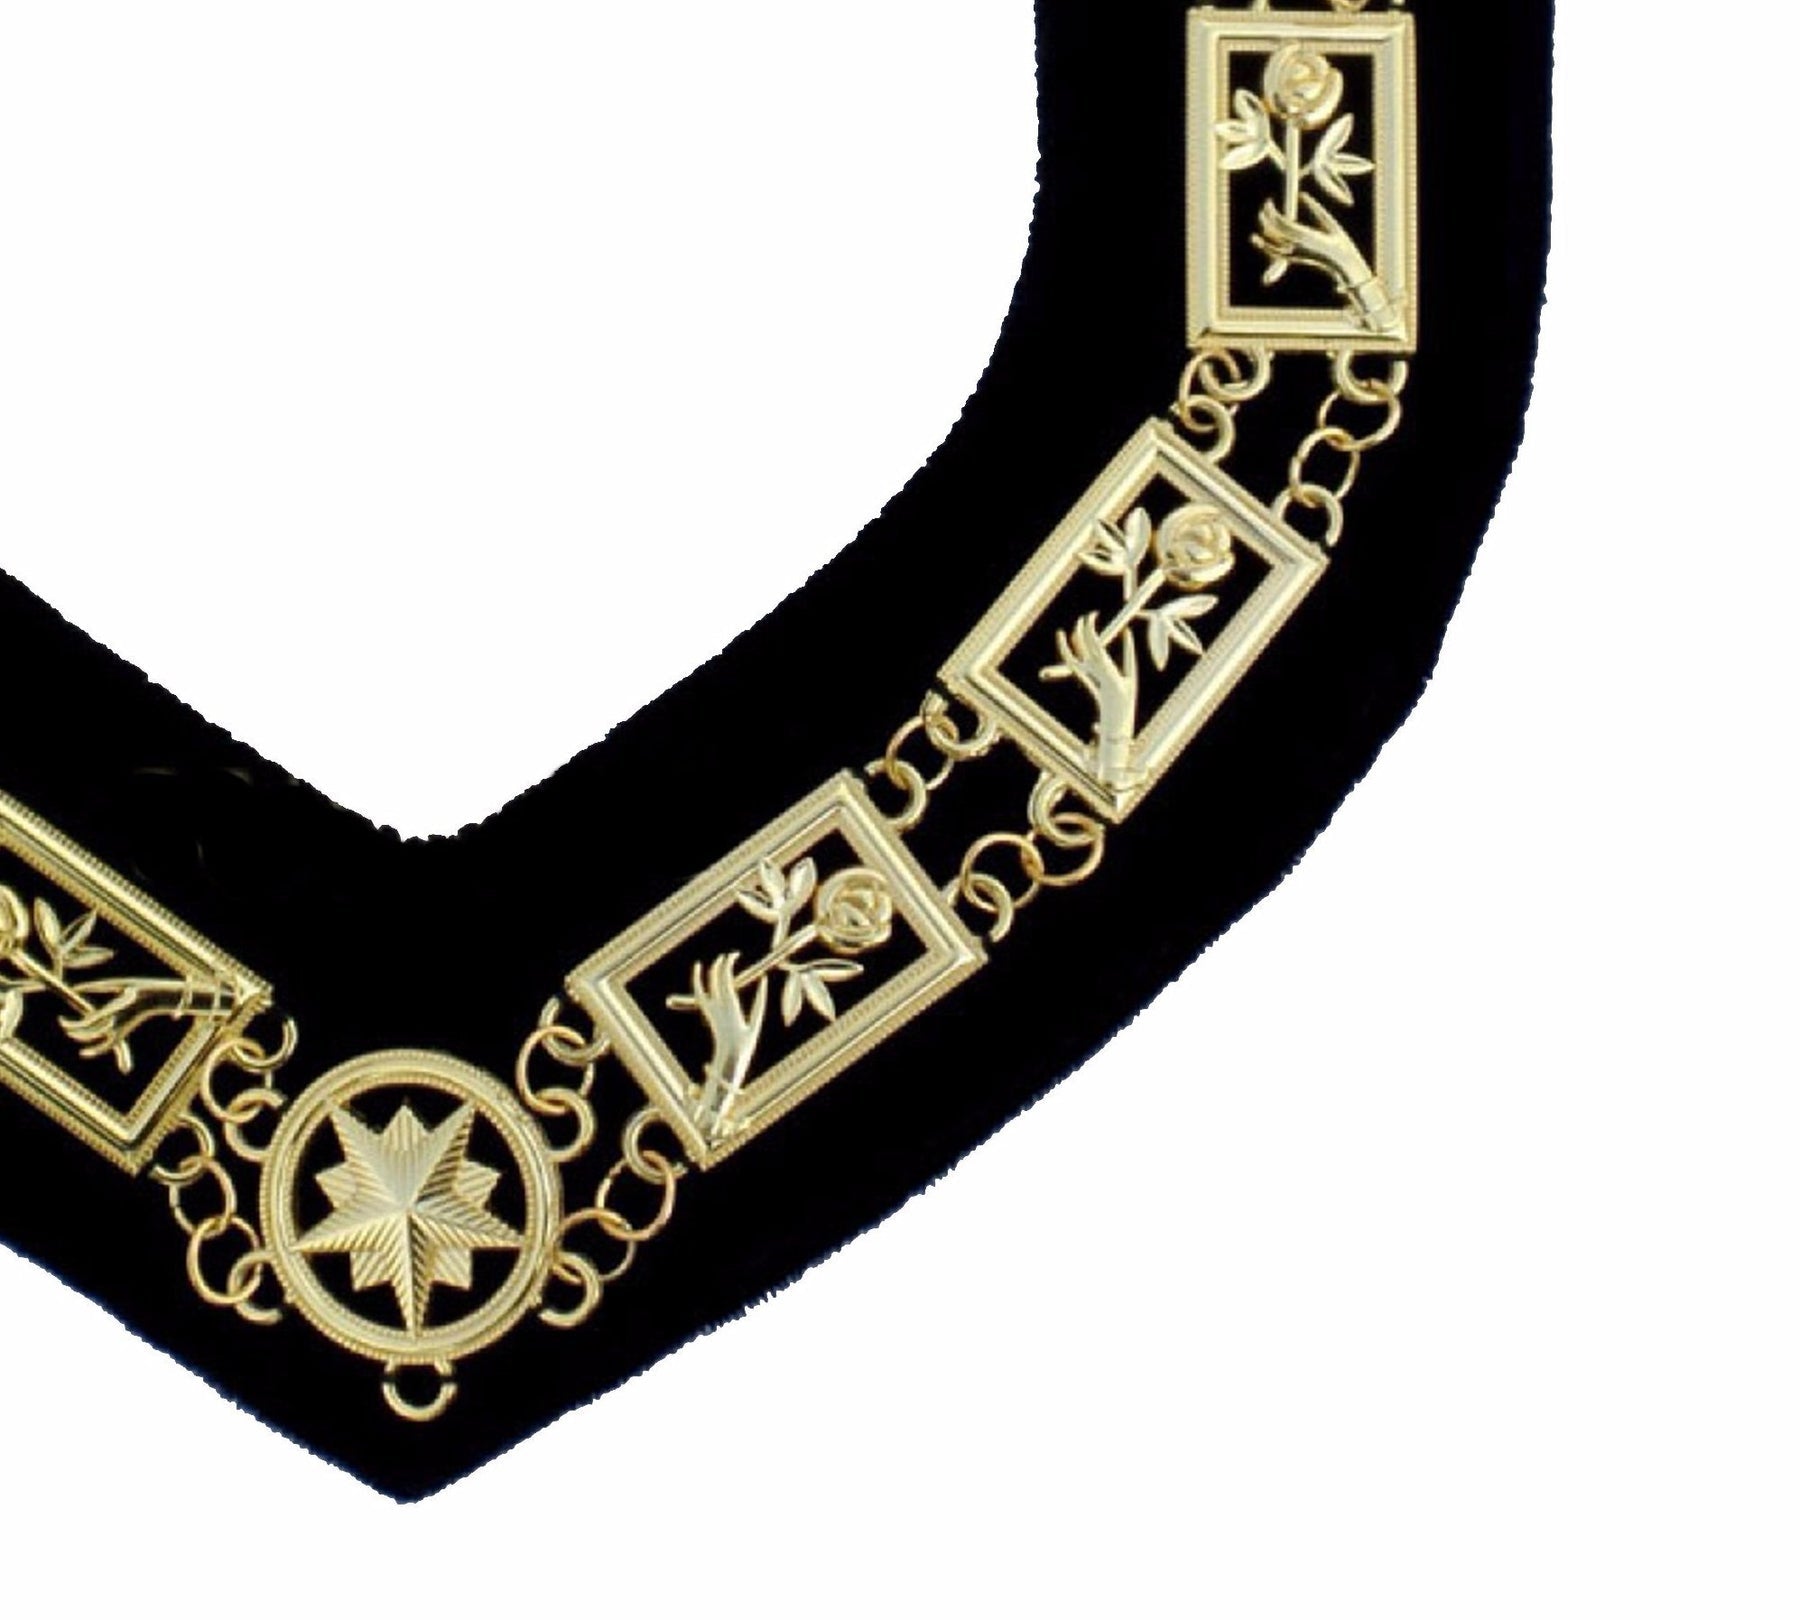 English Scottish Rite Masonic Chain Collar - Gold Plated on Blue Velvet-Chain Collars-Masonic Makers